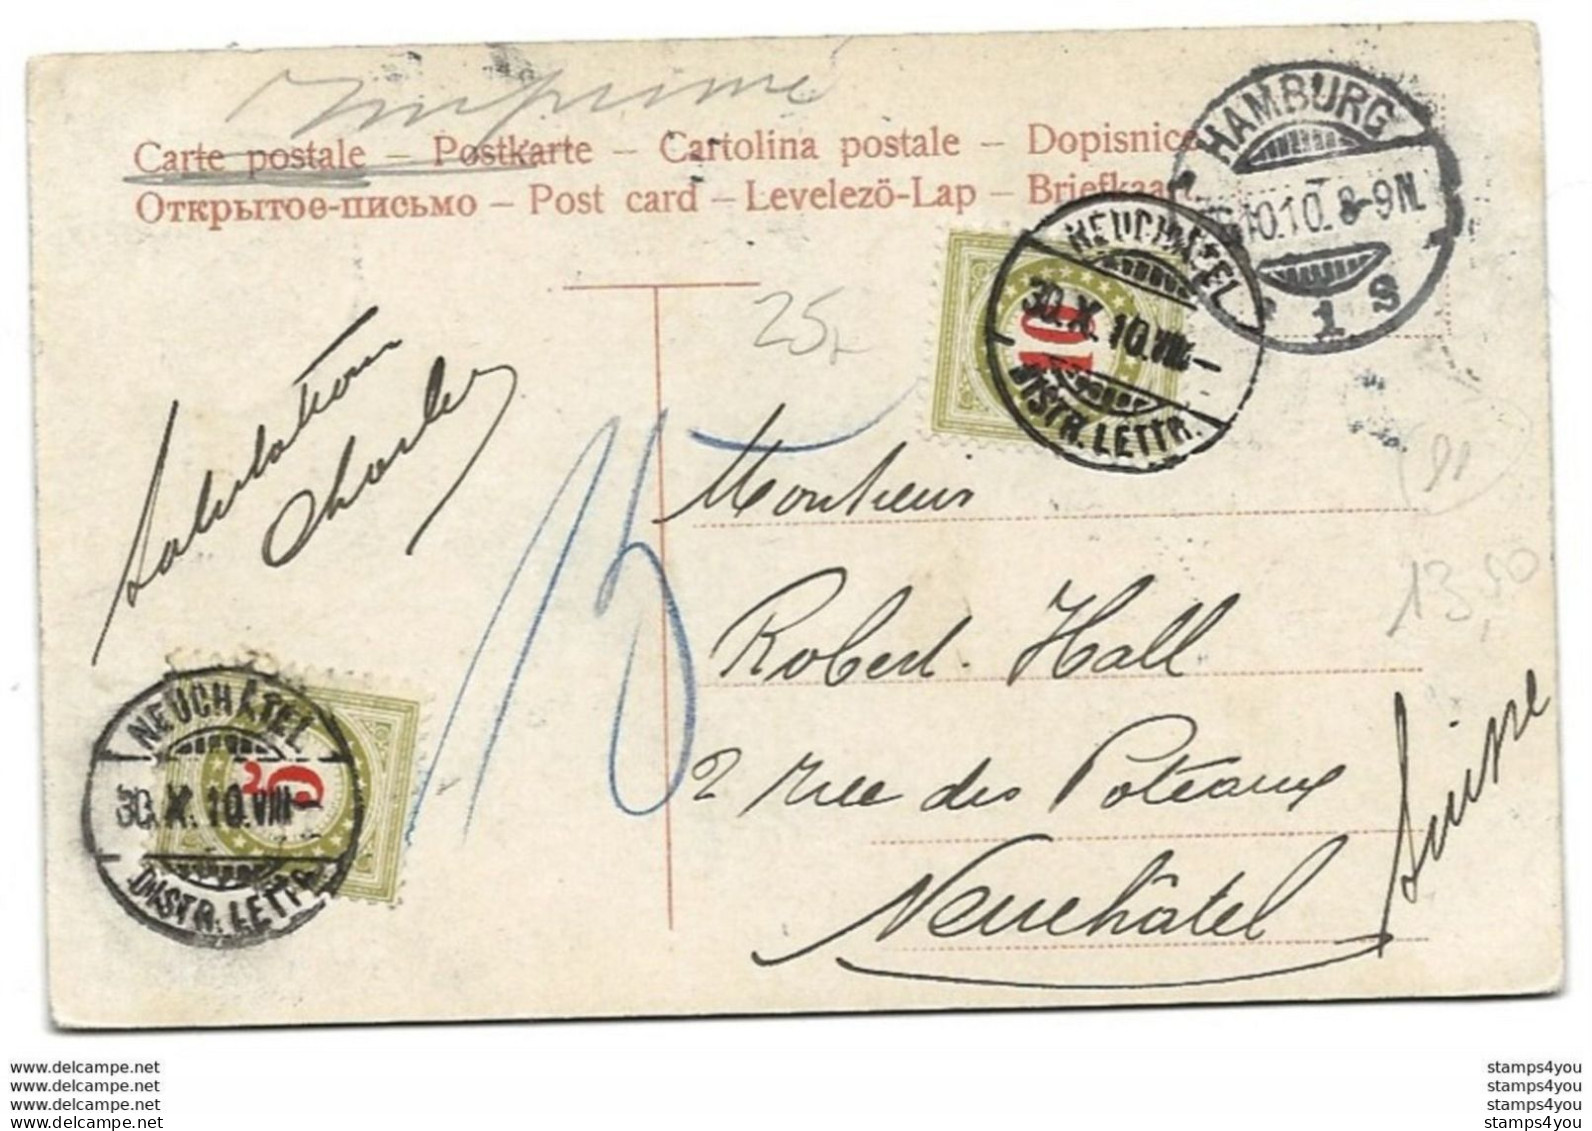 44 - 11 - Carte Envoyée De Hamburg En Suisse 1910 - 2 Timbres Suisses Taxe - Vrijstelling Van Portkosten